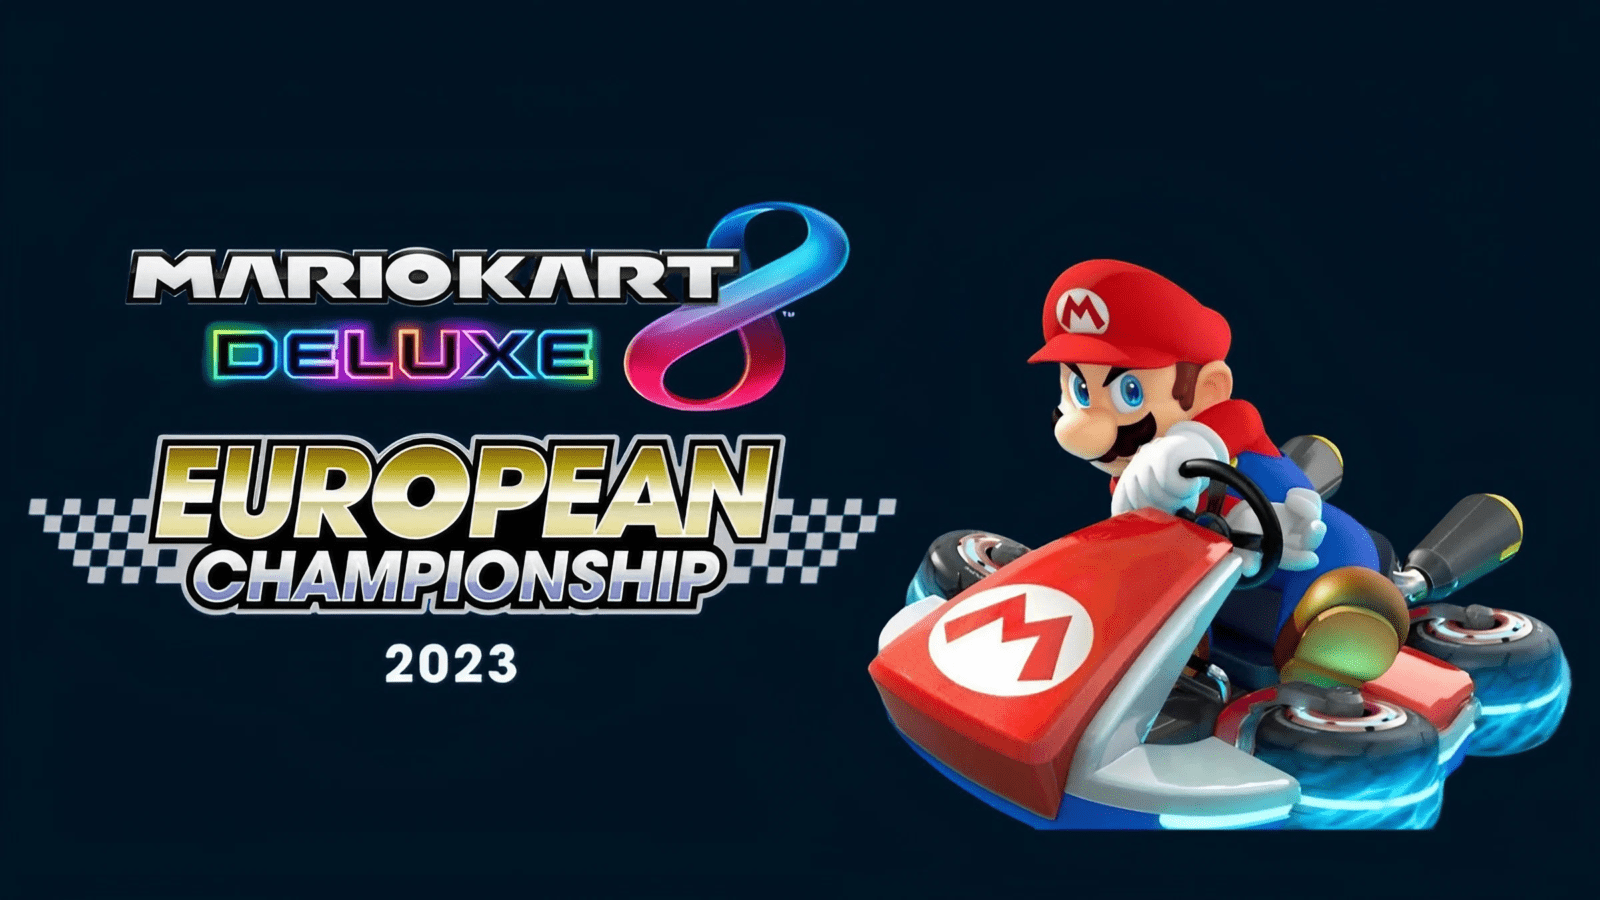 Mario Kart 8 Deluxe European Championship